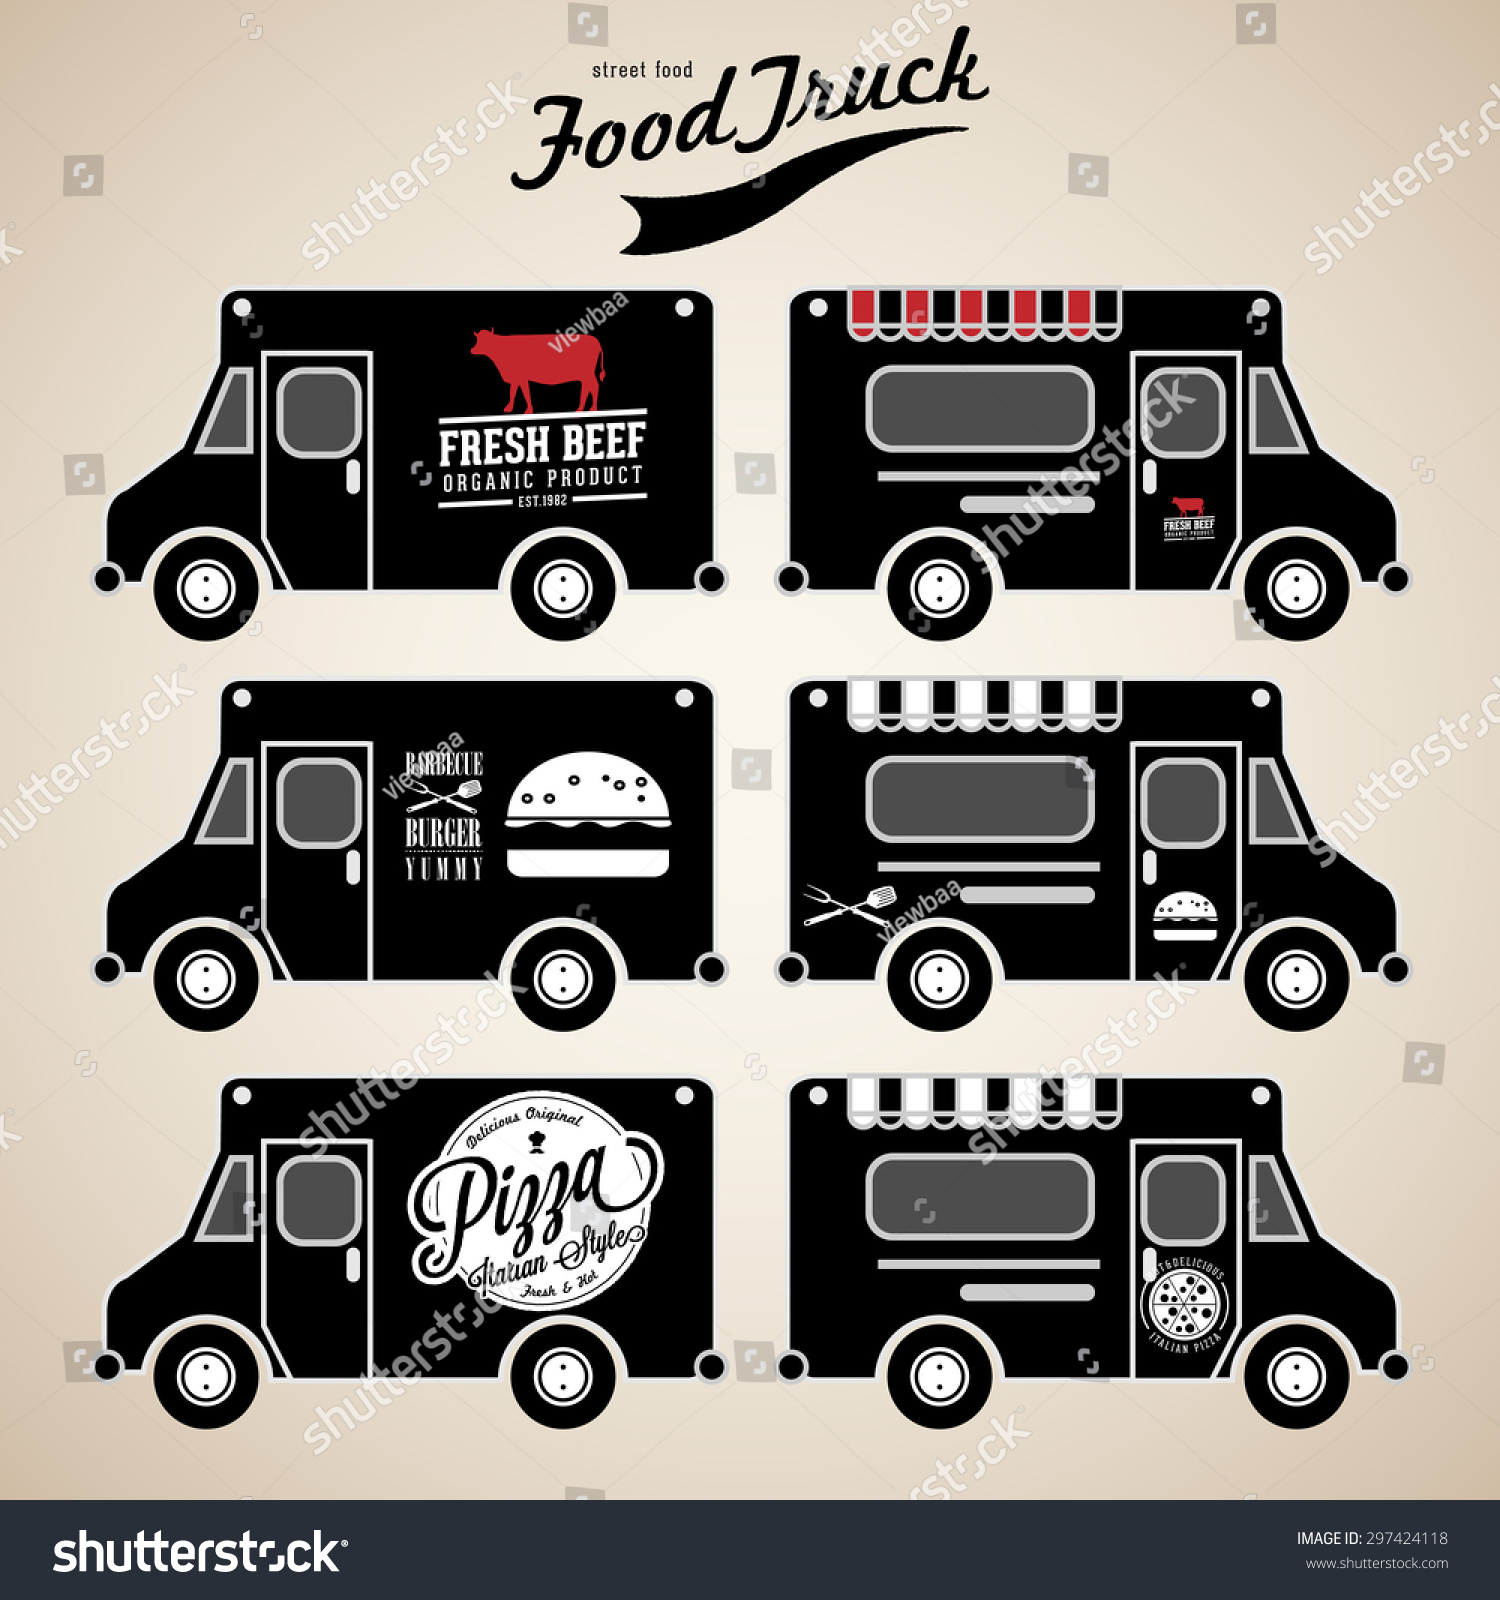 Vector Set Of Food Truck On Black - 297424118 : Shutterstock